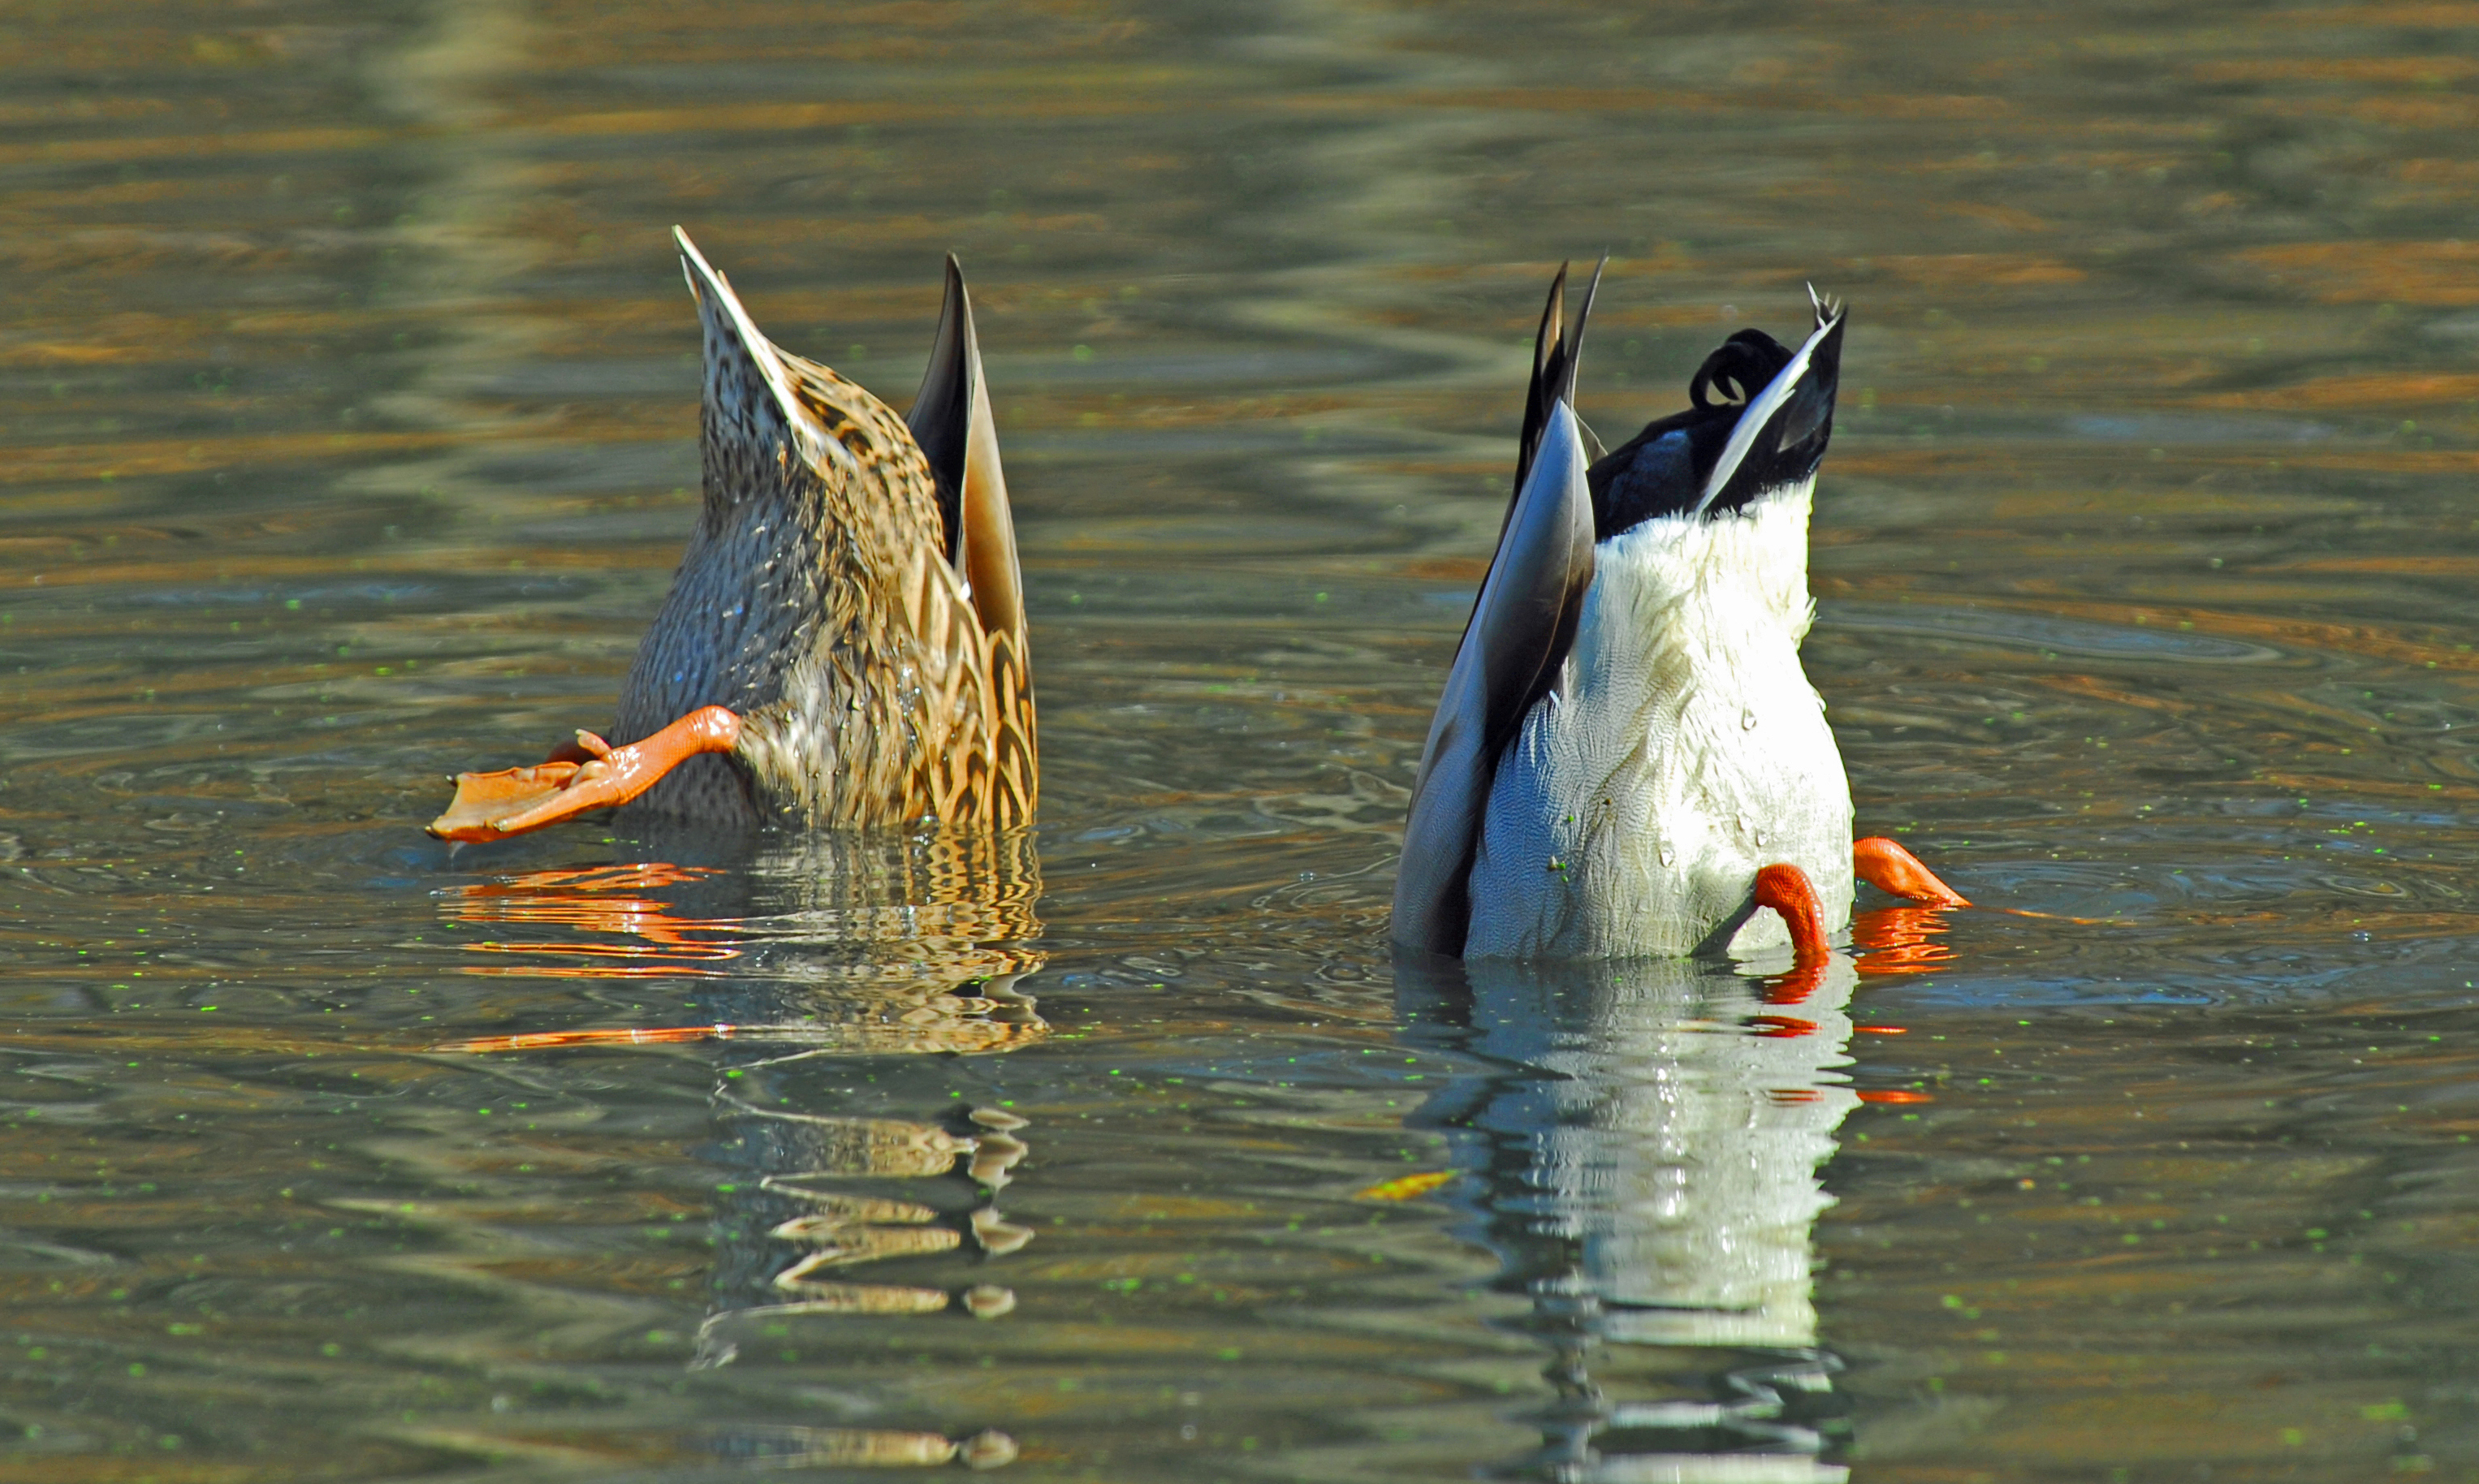 Two mallards feeding with their heads underwater.